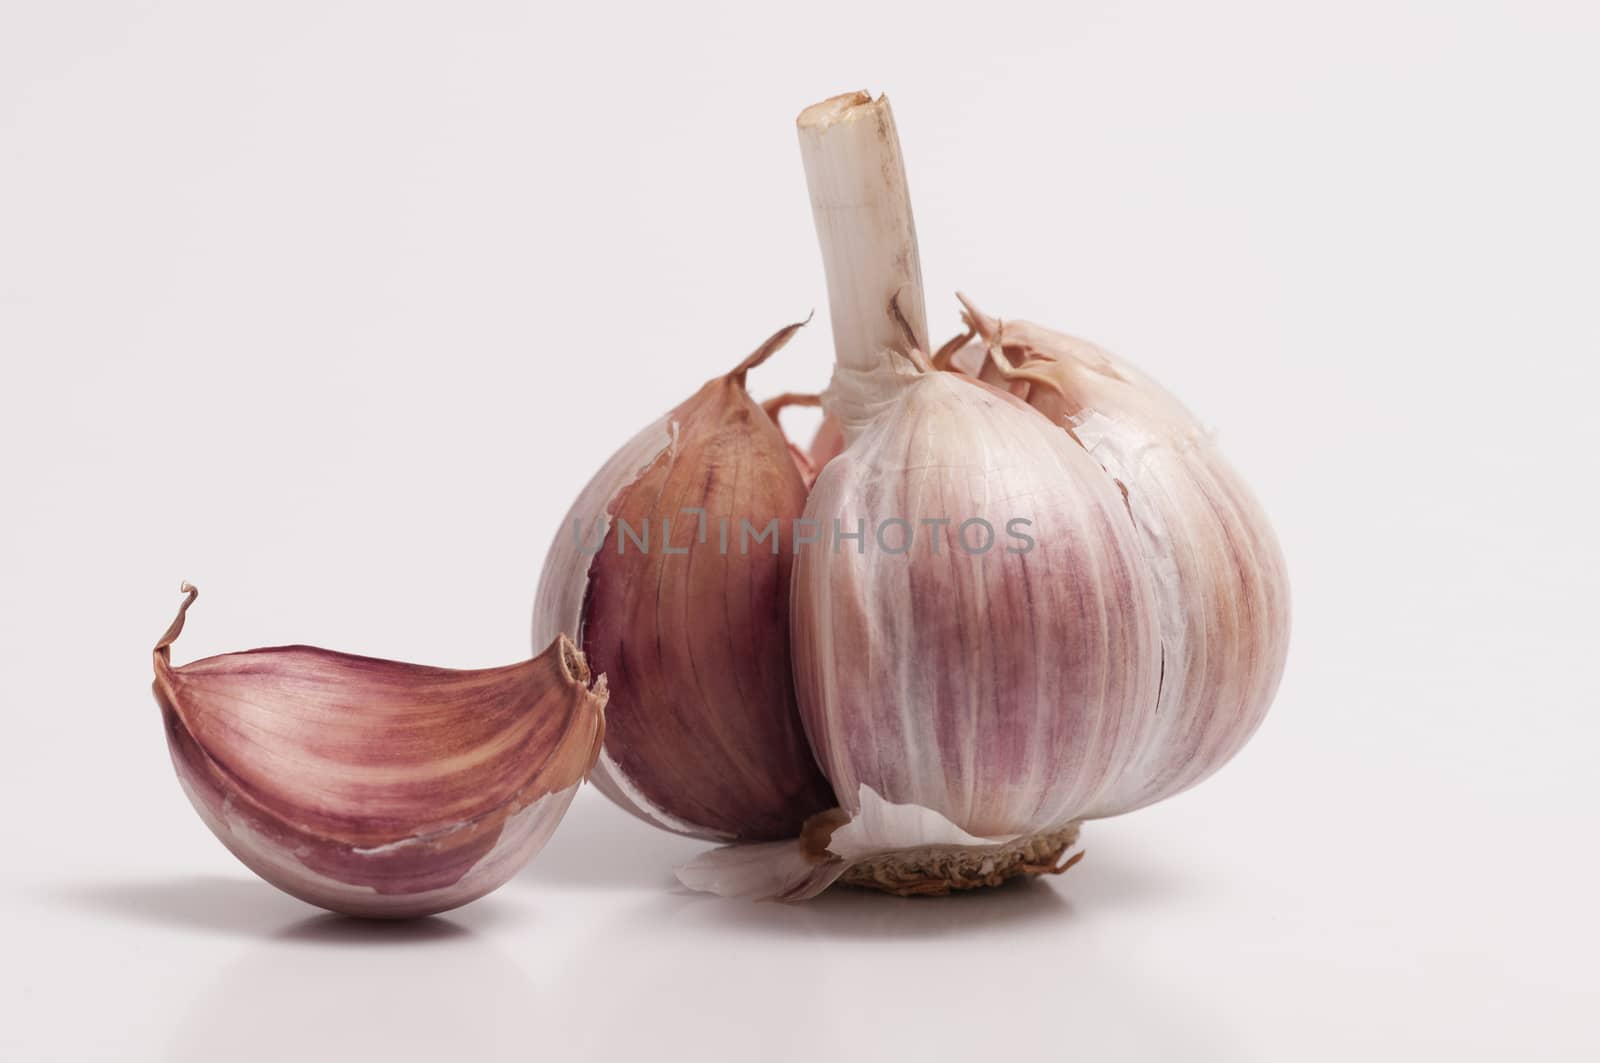 Garlic Bulb and a Individual Clove by rodrigobellizzi